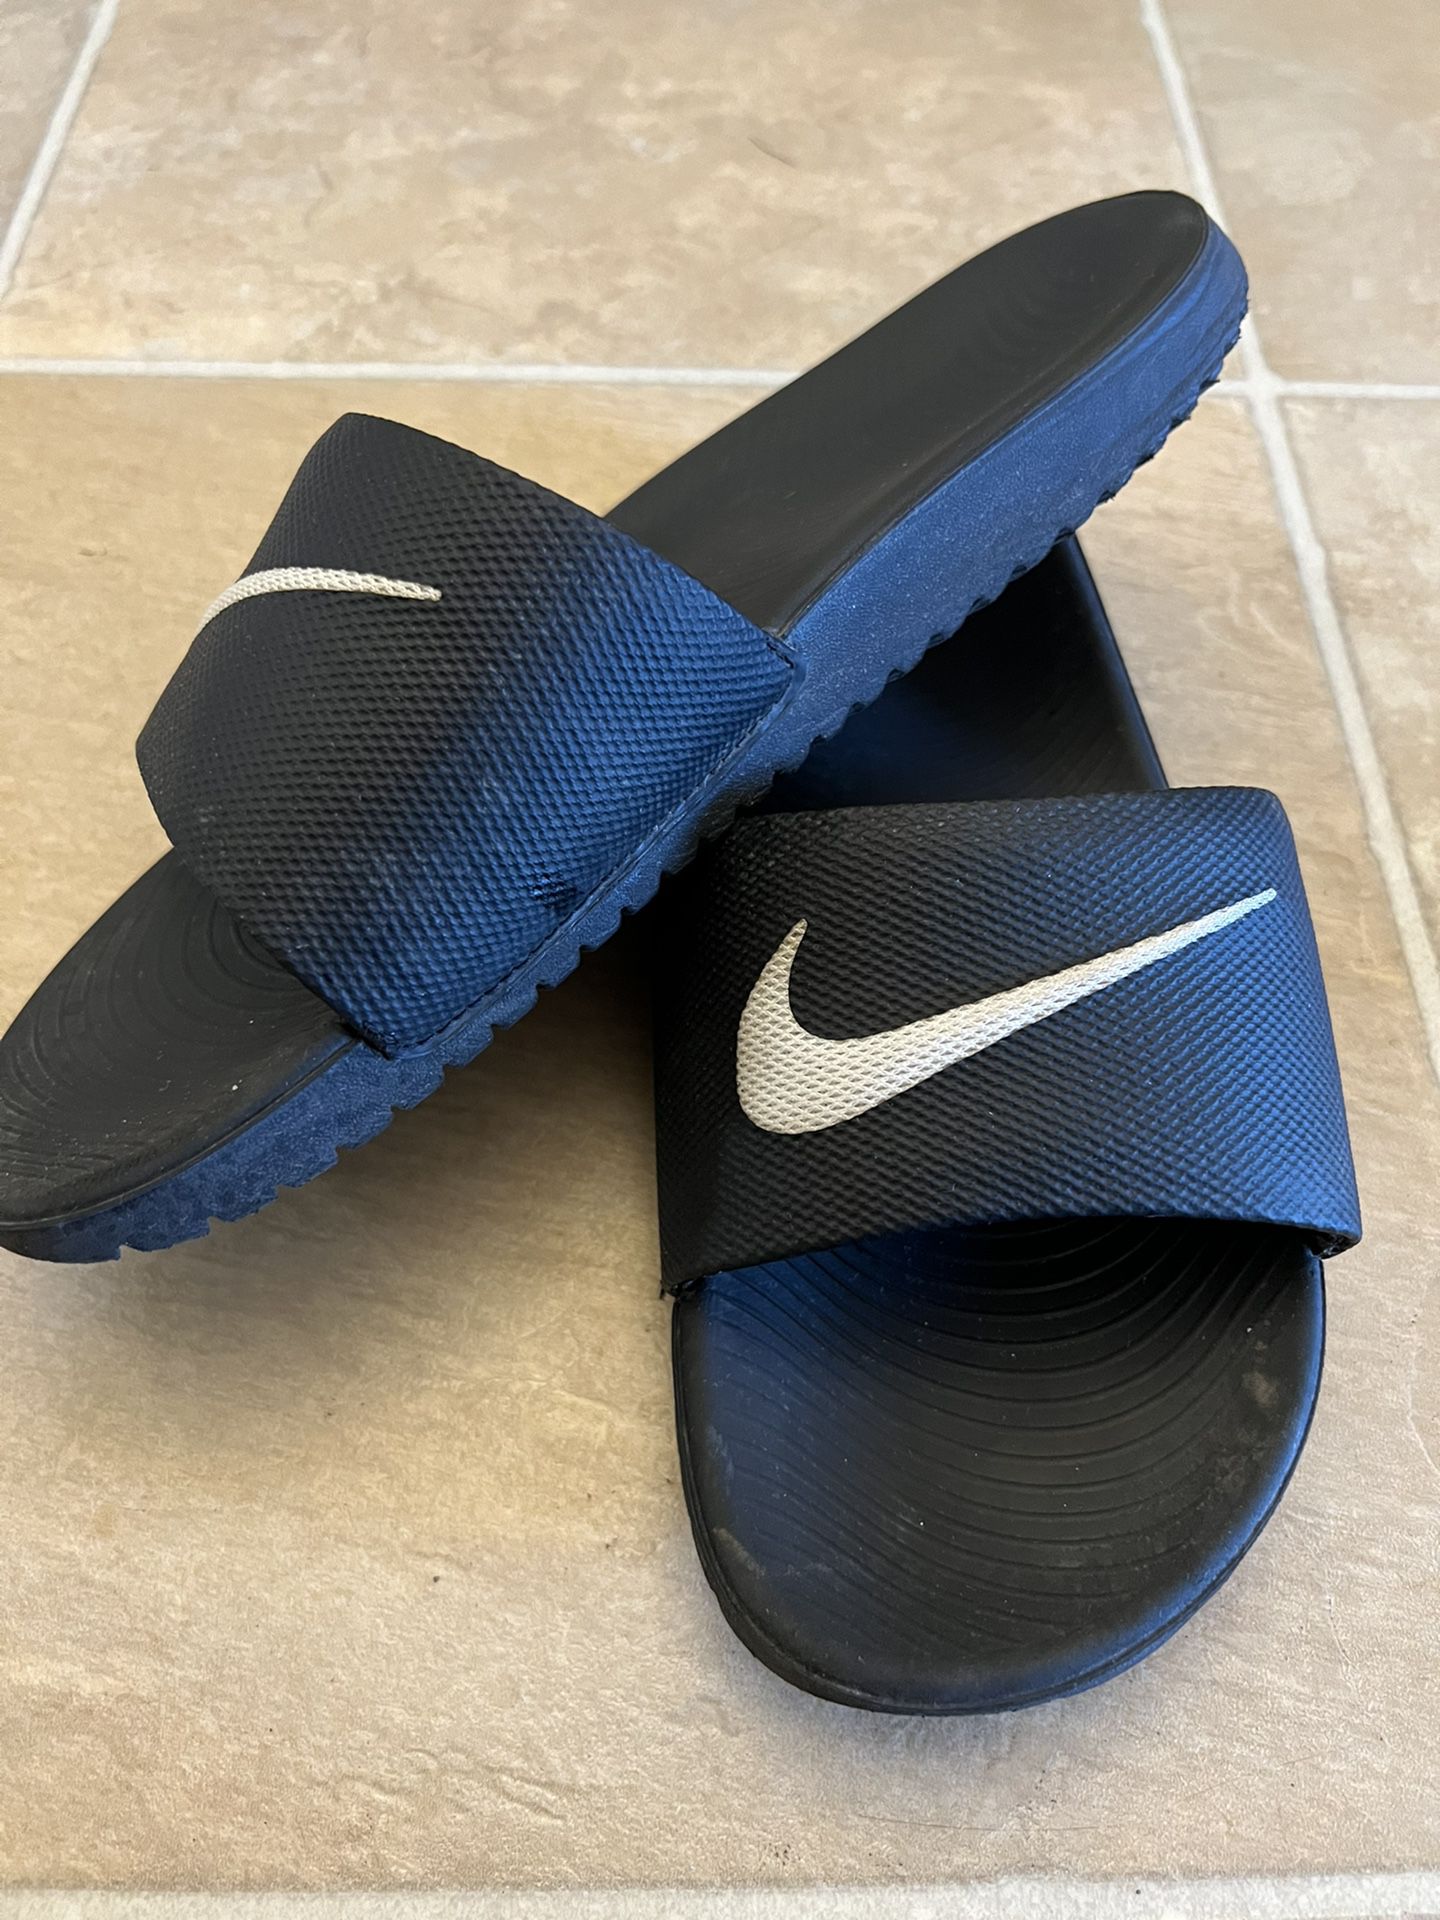 Kids Nike Slides Size 5 for Sale in San Jose, CA - OfferUp